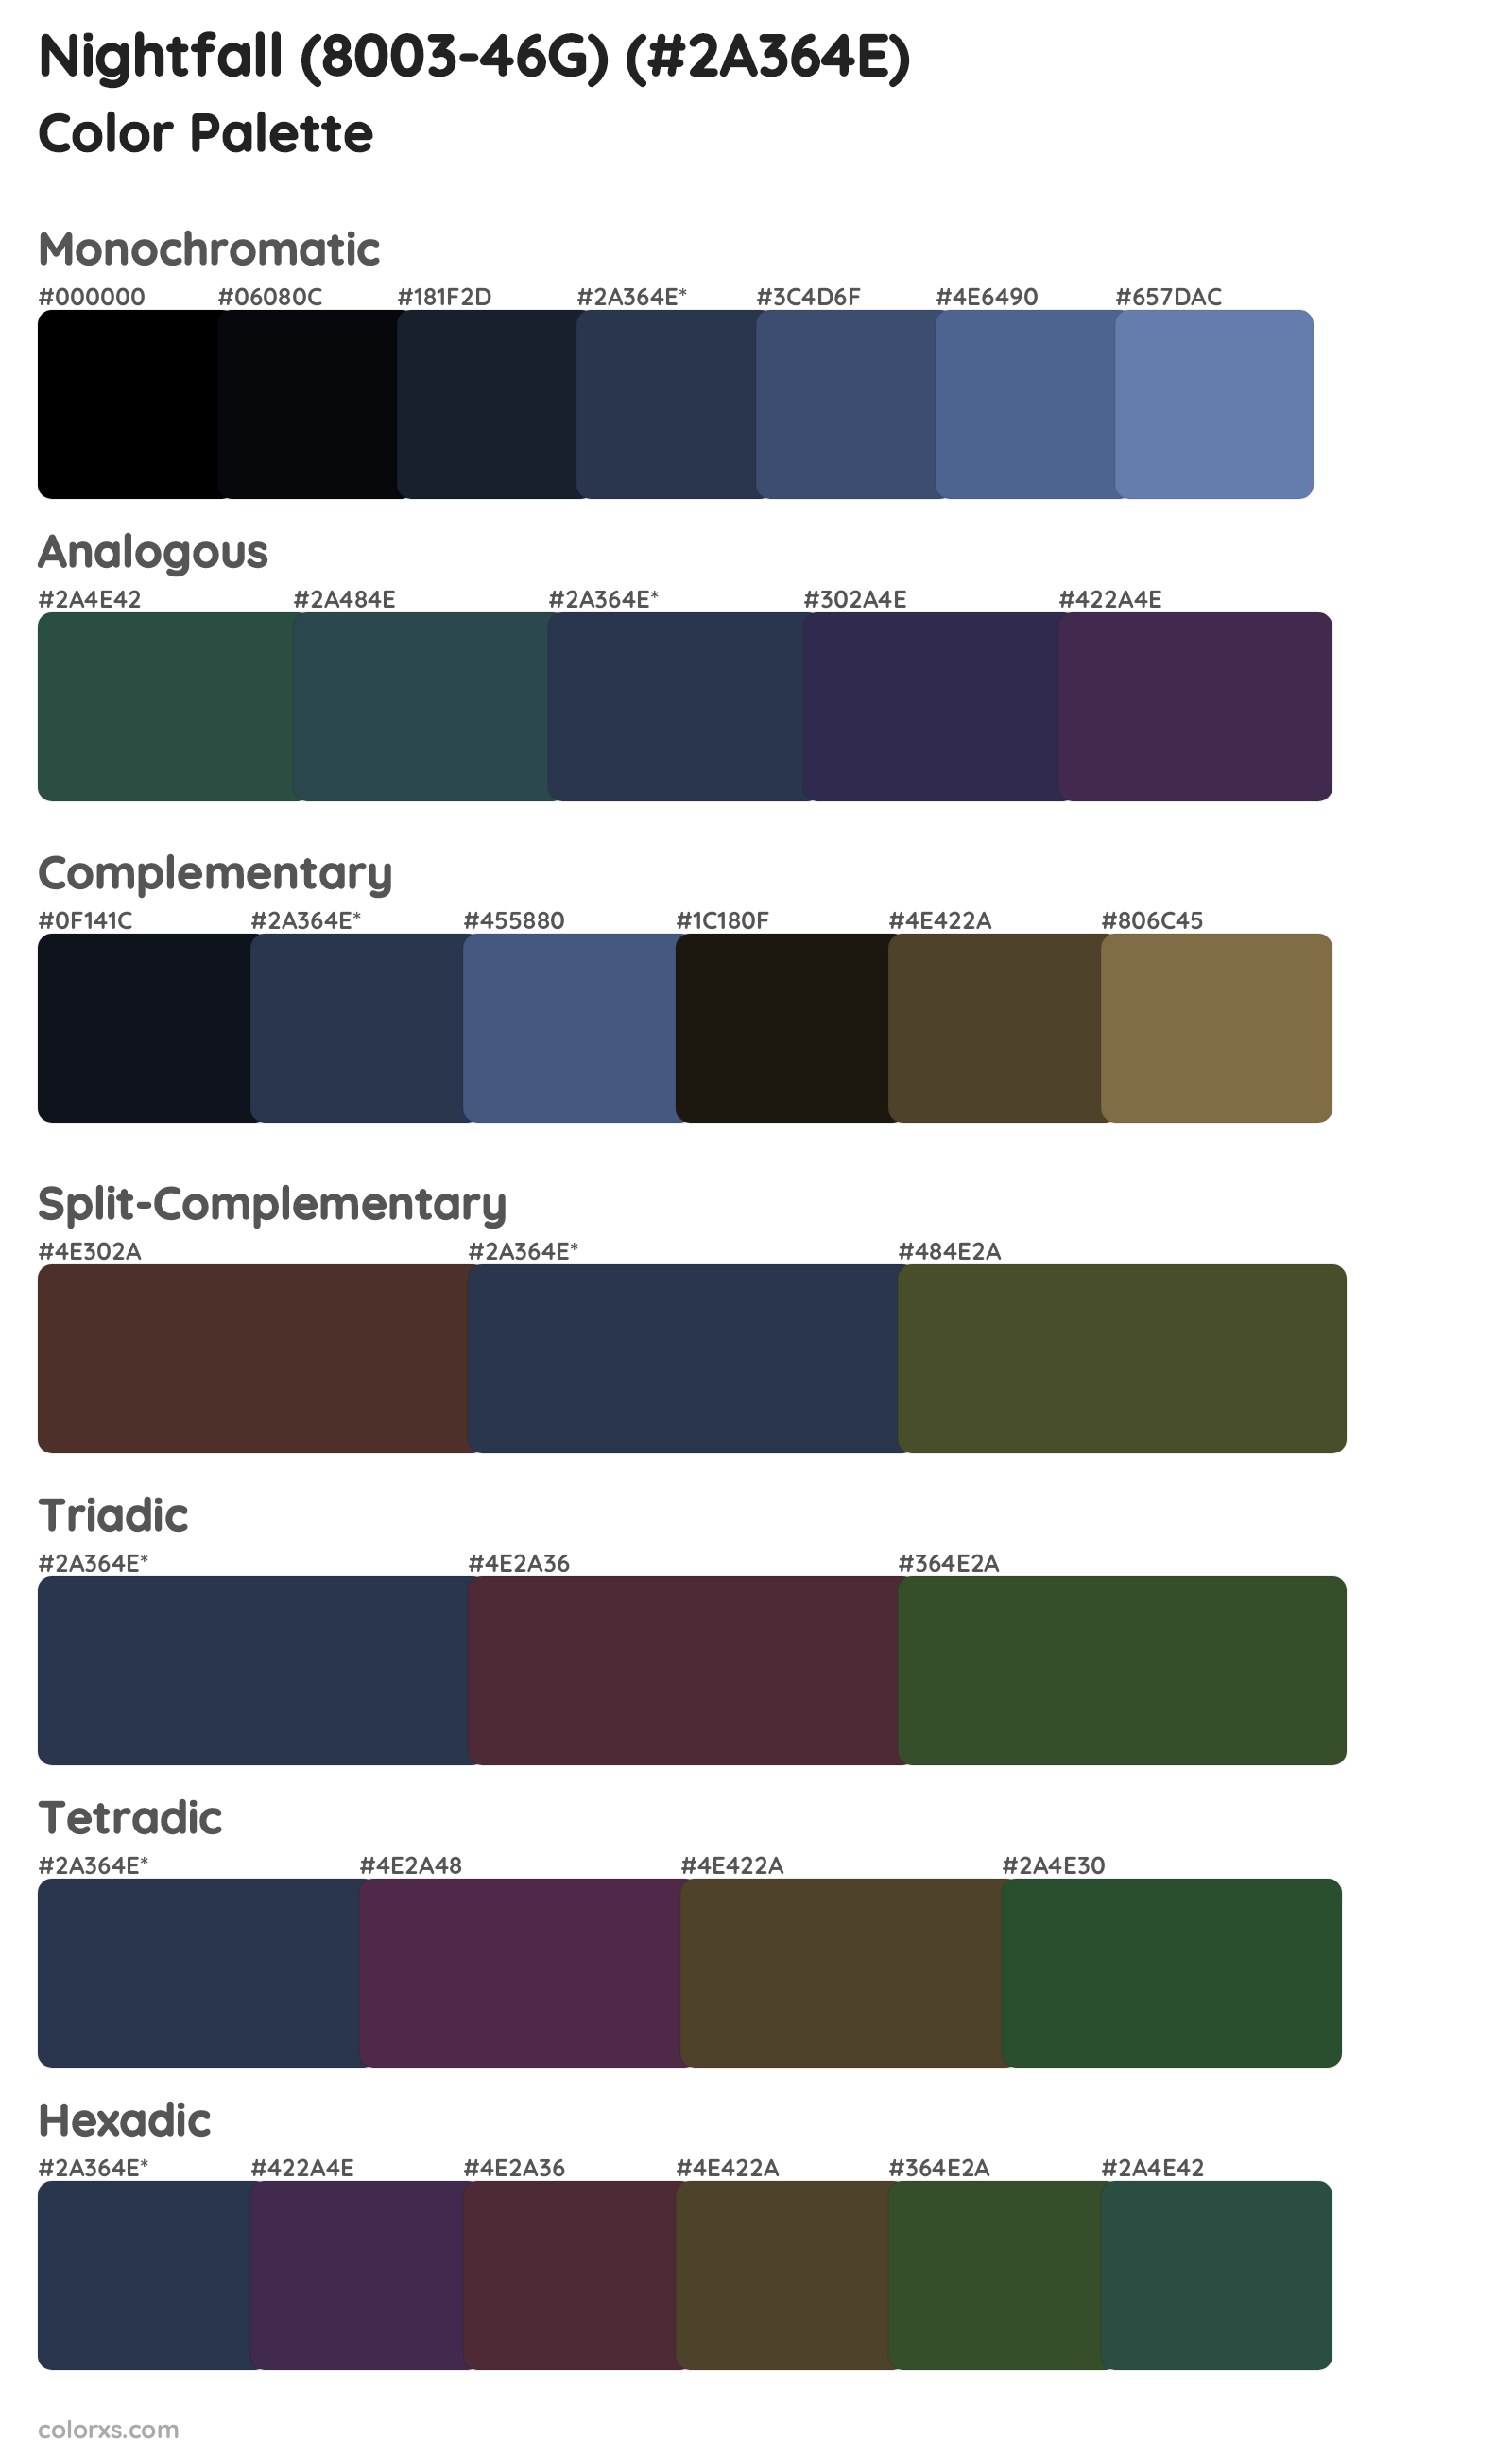 Nightfall (8003-46G) Color Scheme Palettes